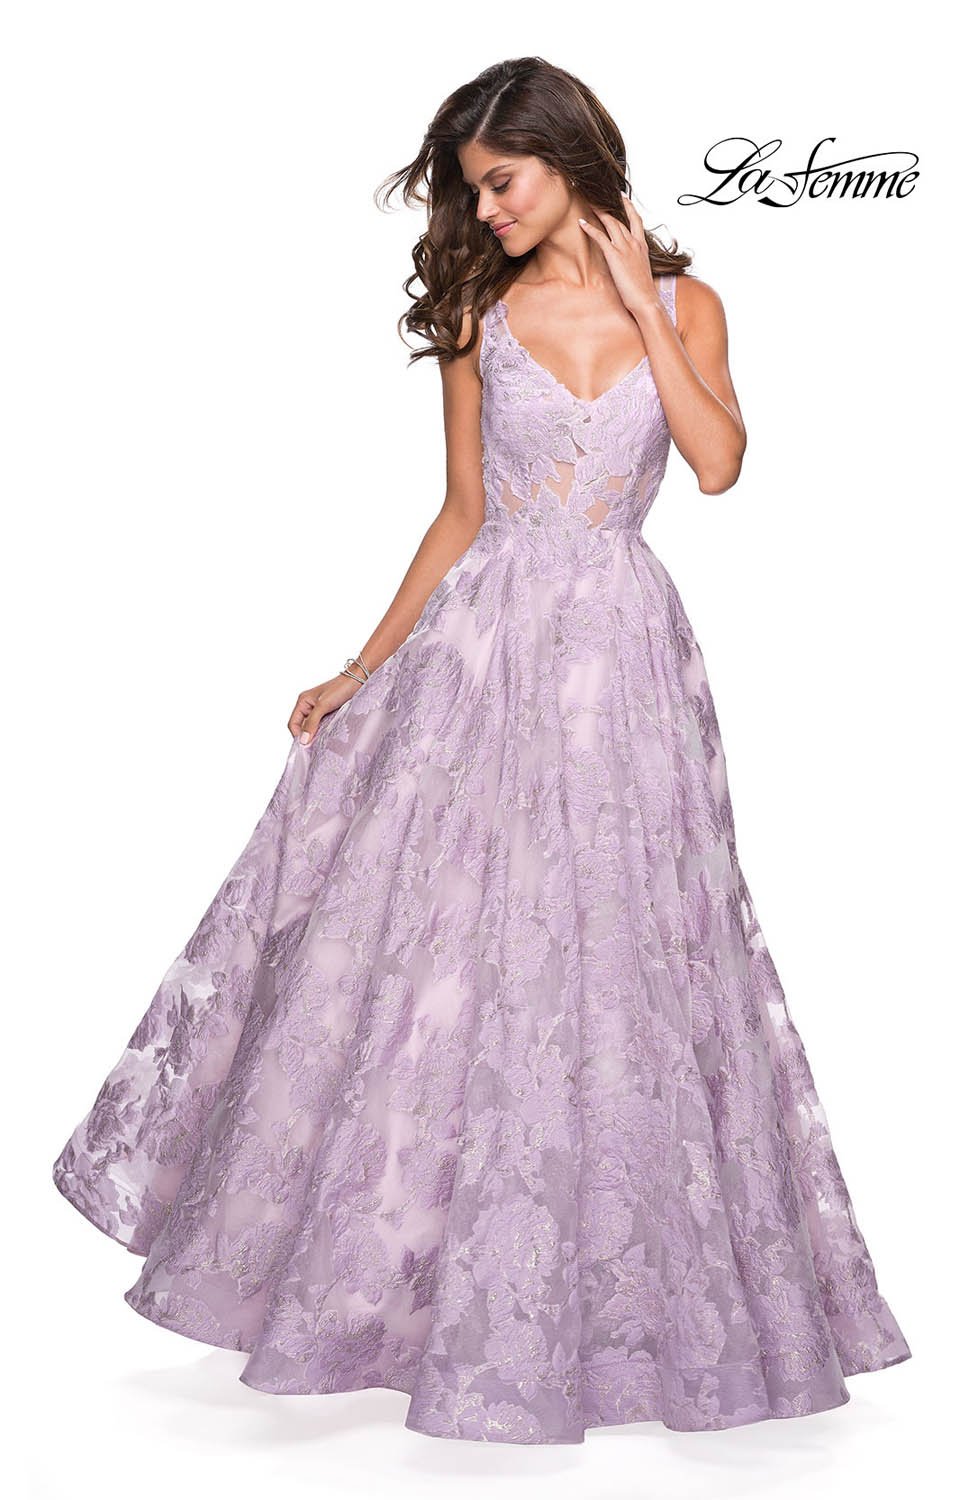 La Femme 27505 dress images in these colors: Lavender, Light Pink, Silver.